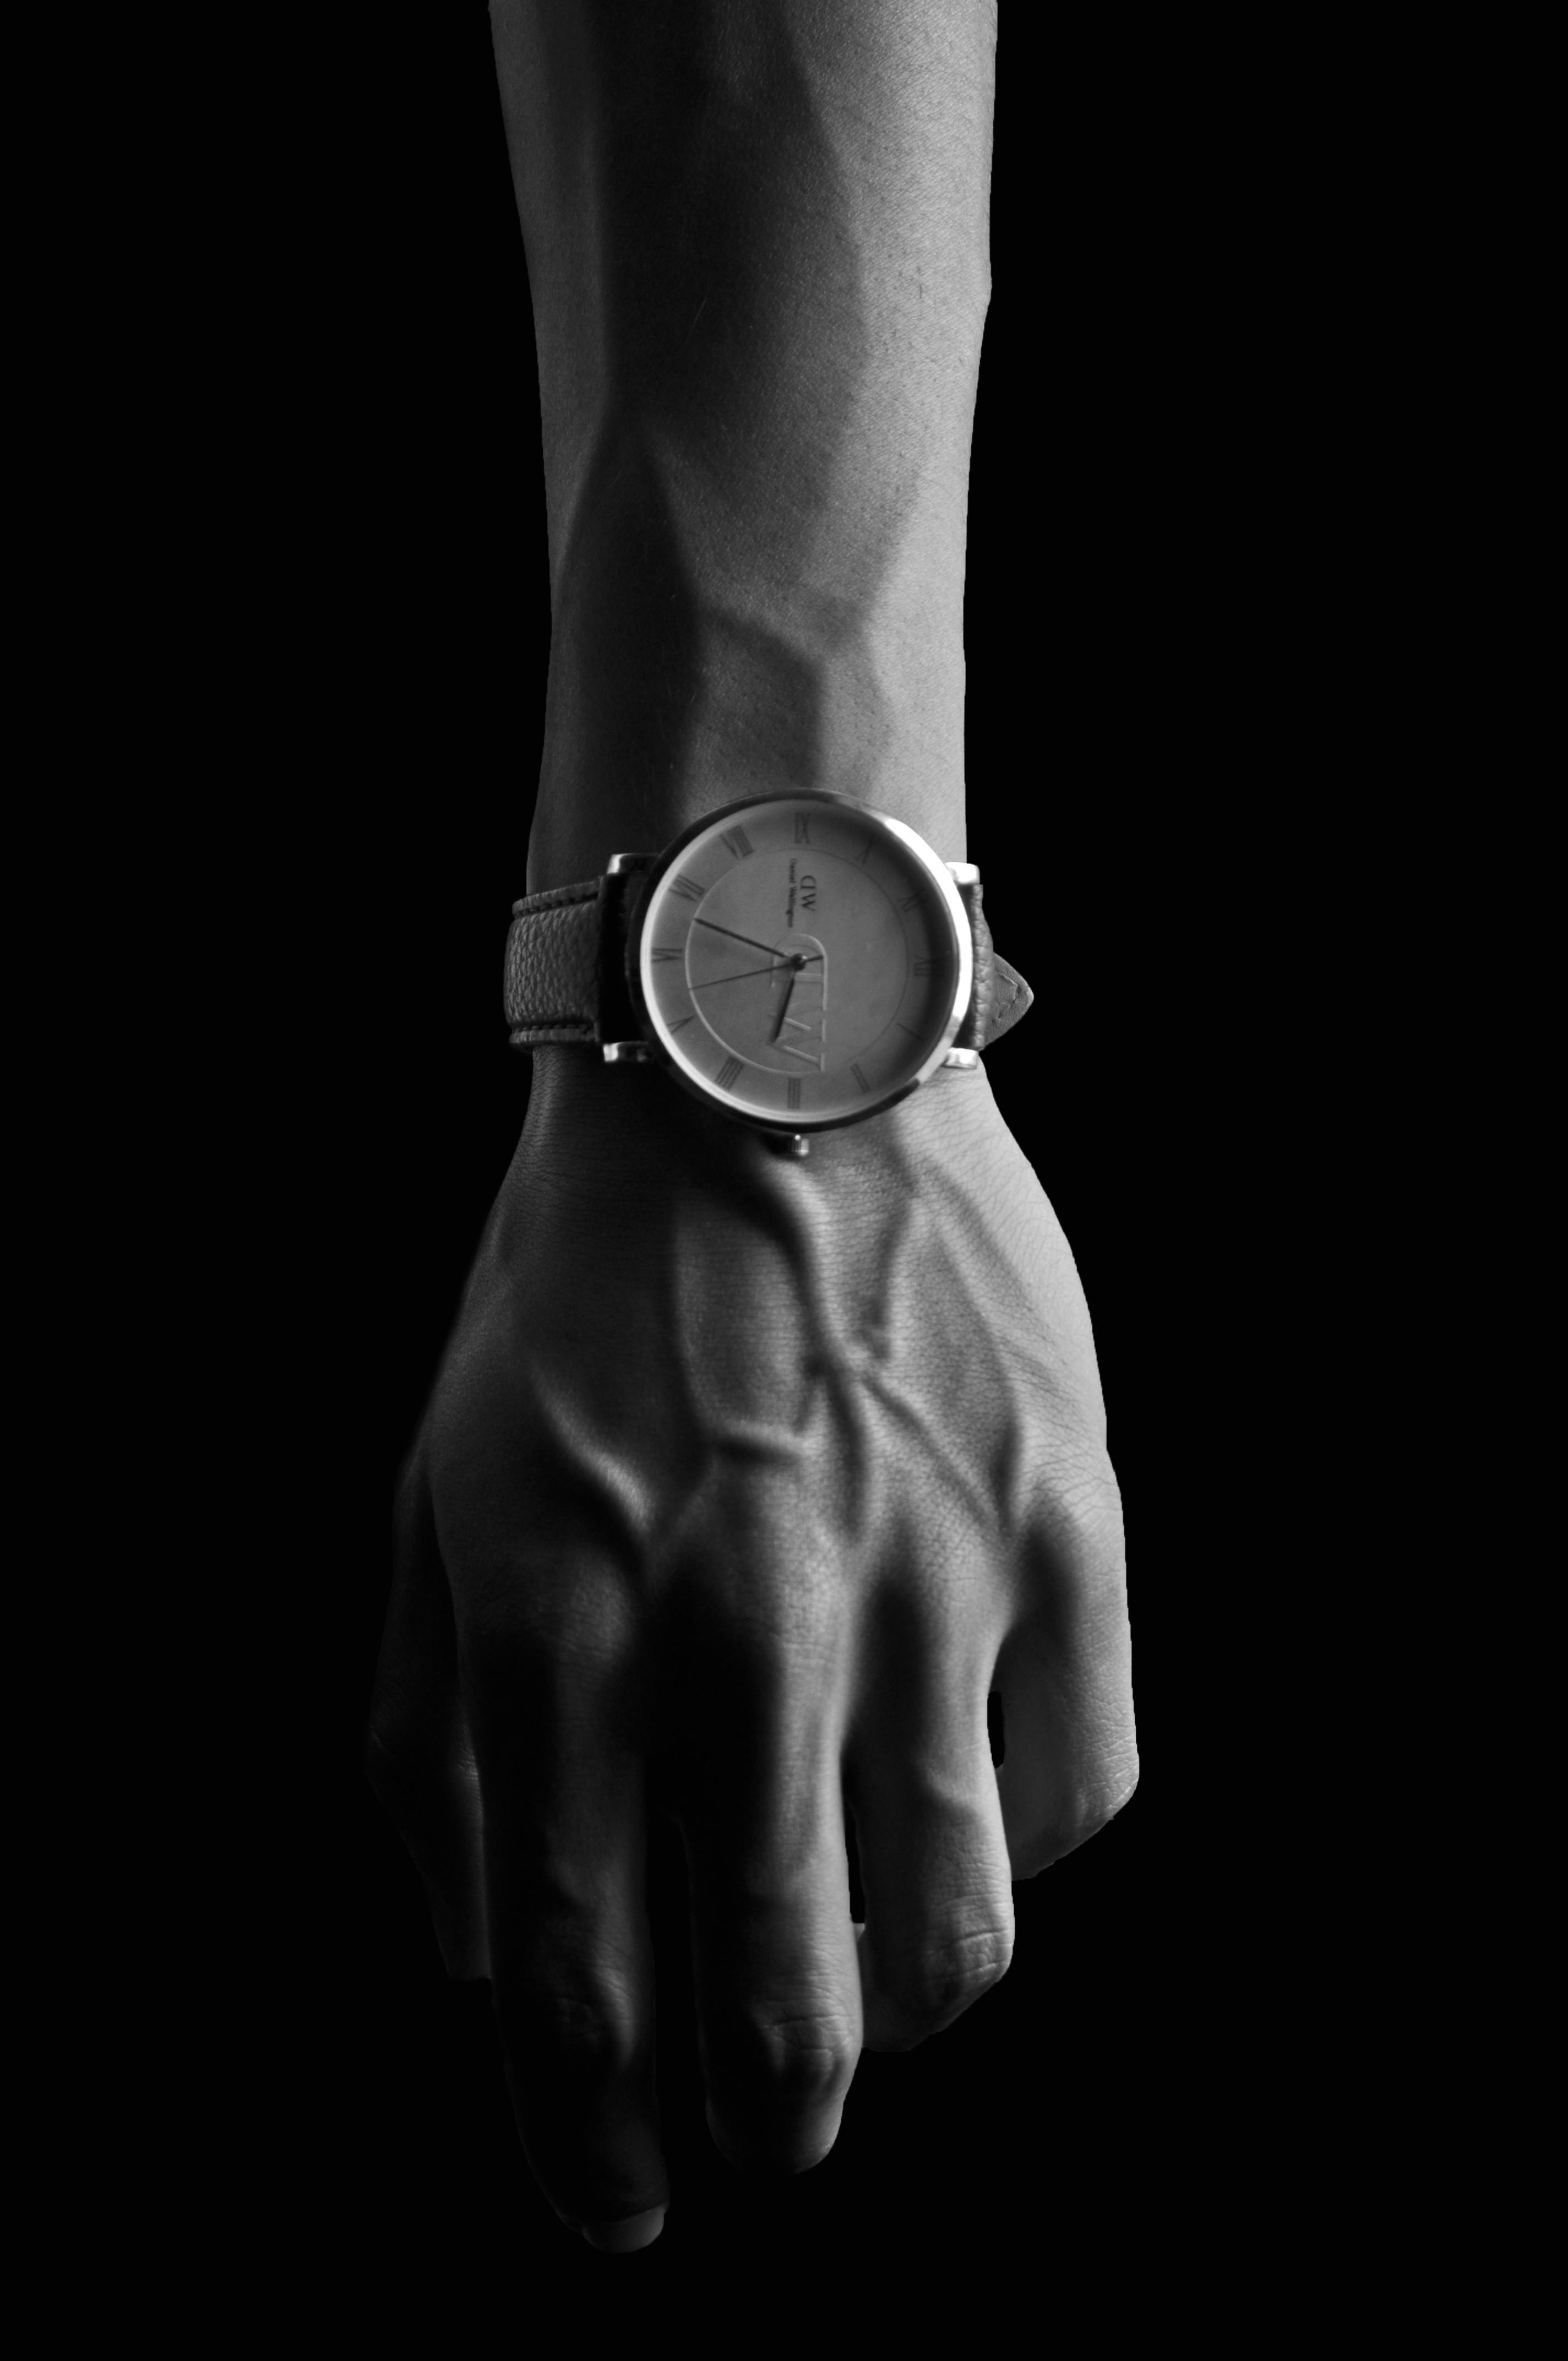 Most Popular Luxury Watch Brands | The Watch Club by SwissWatchExpo